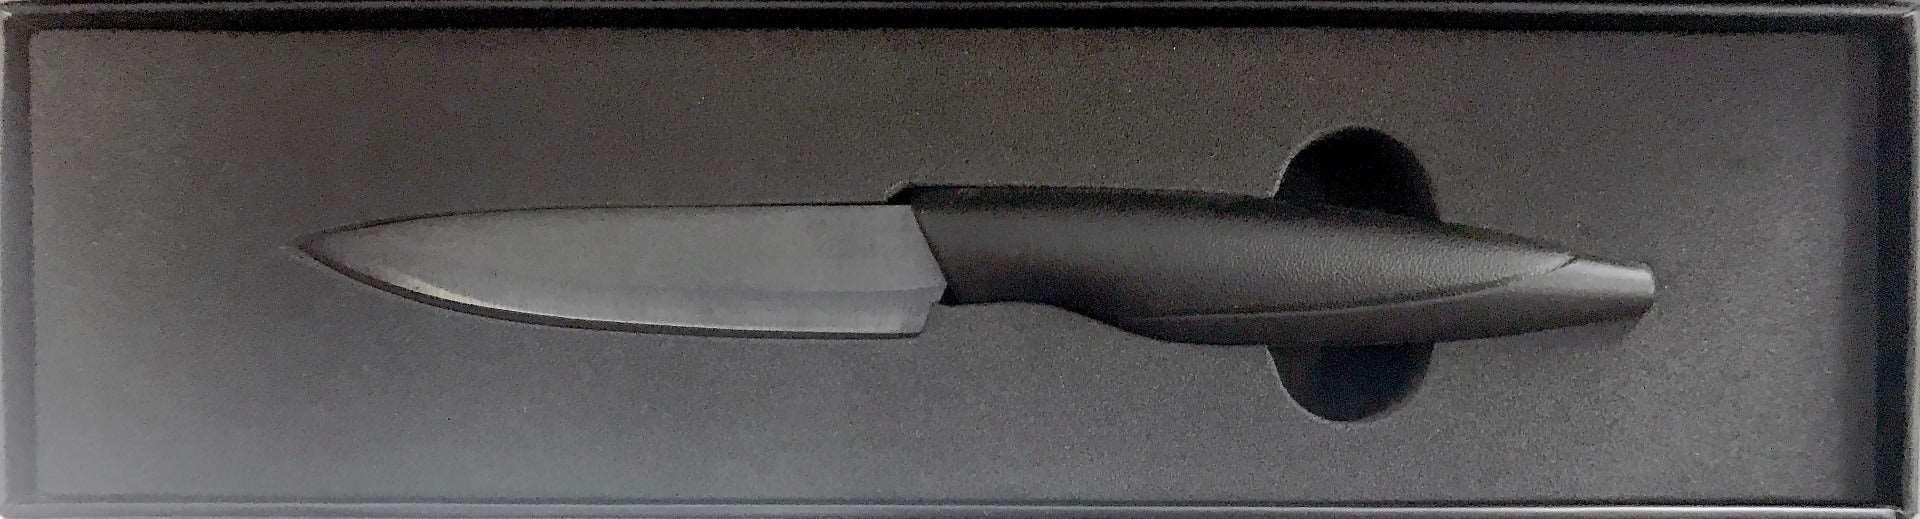 Cara 4 Inch Premium Ceramic Knife - Alkaline World